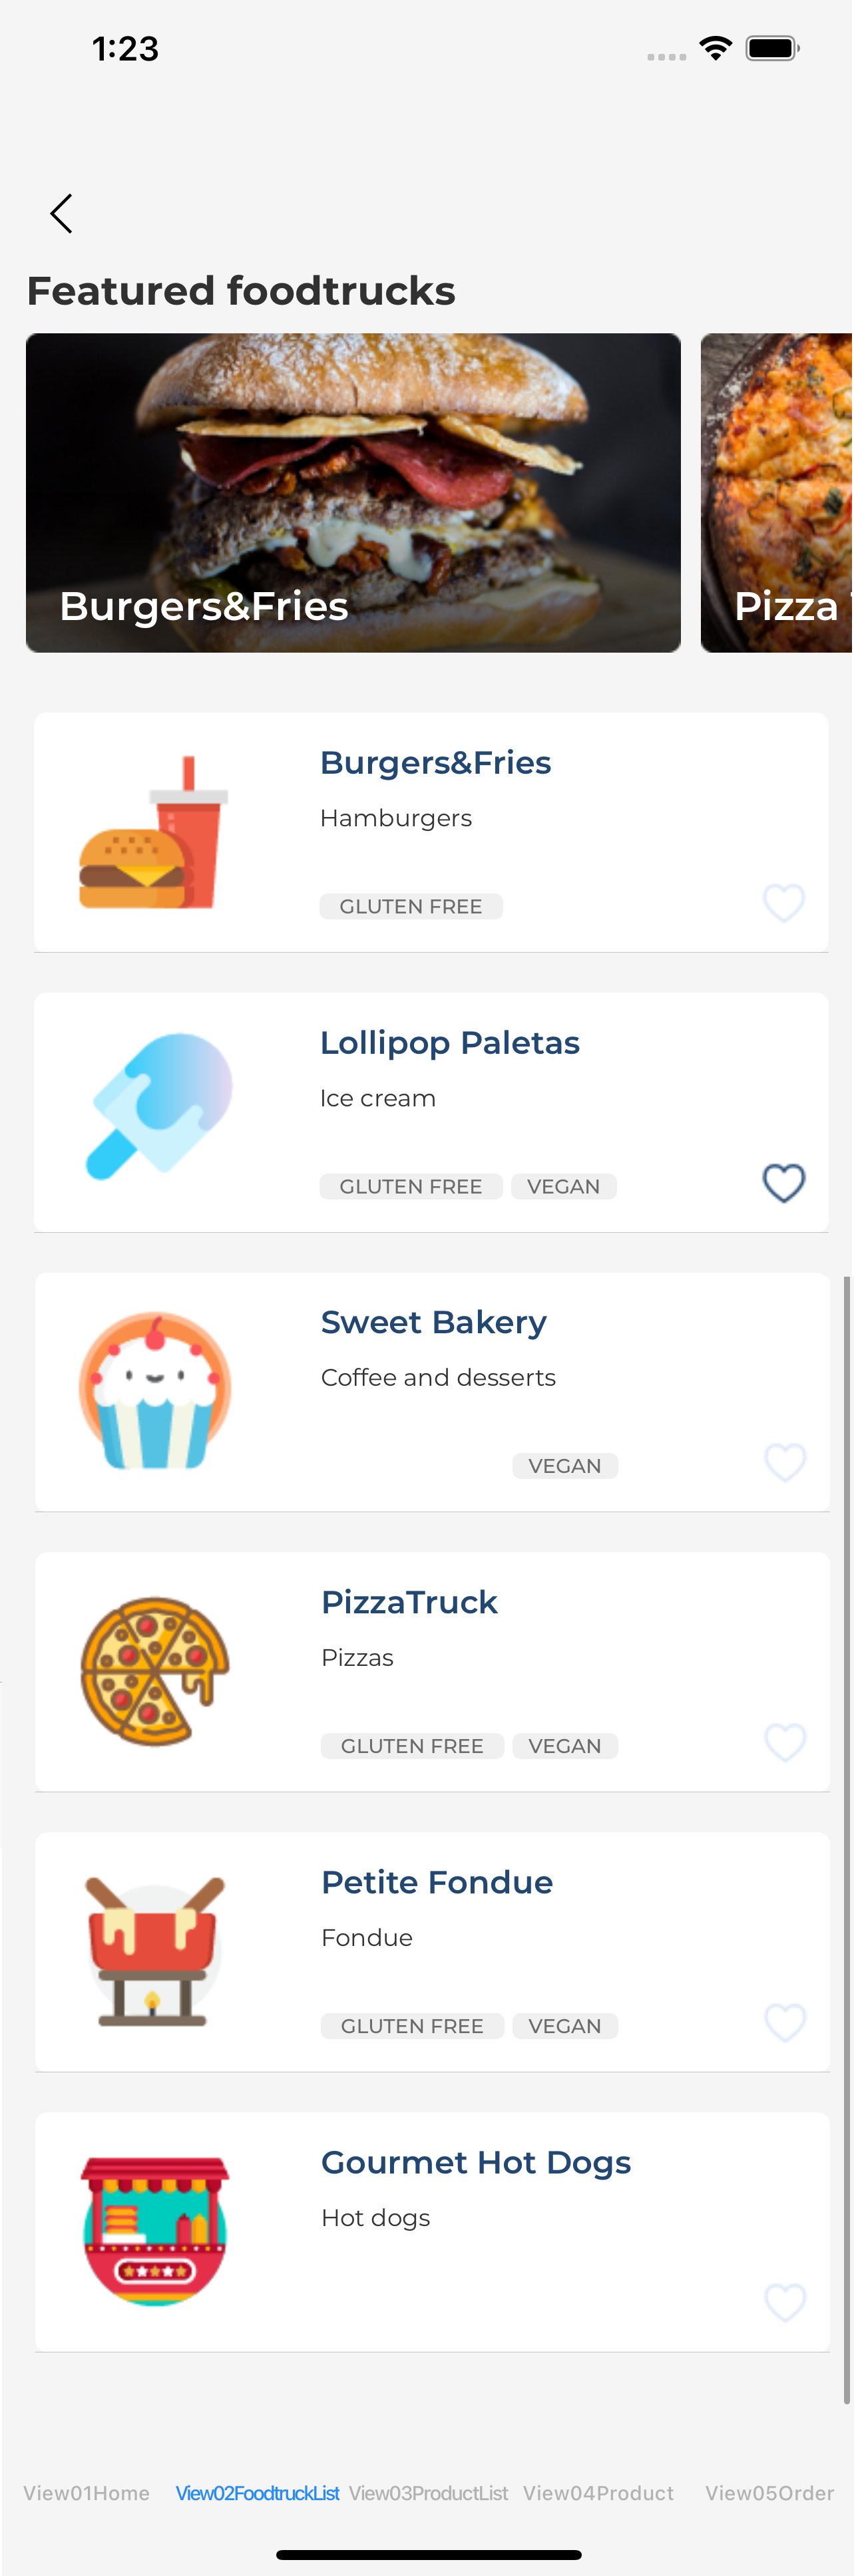 Foodtrucks-iOS-FoodtruckList_20211025133428_1_png